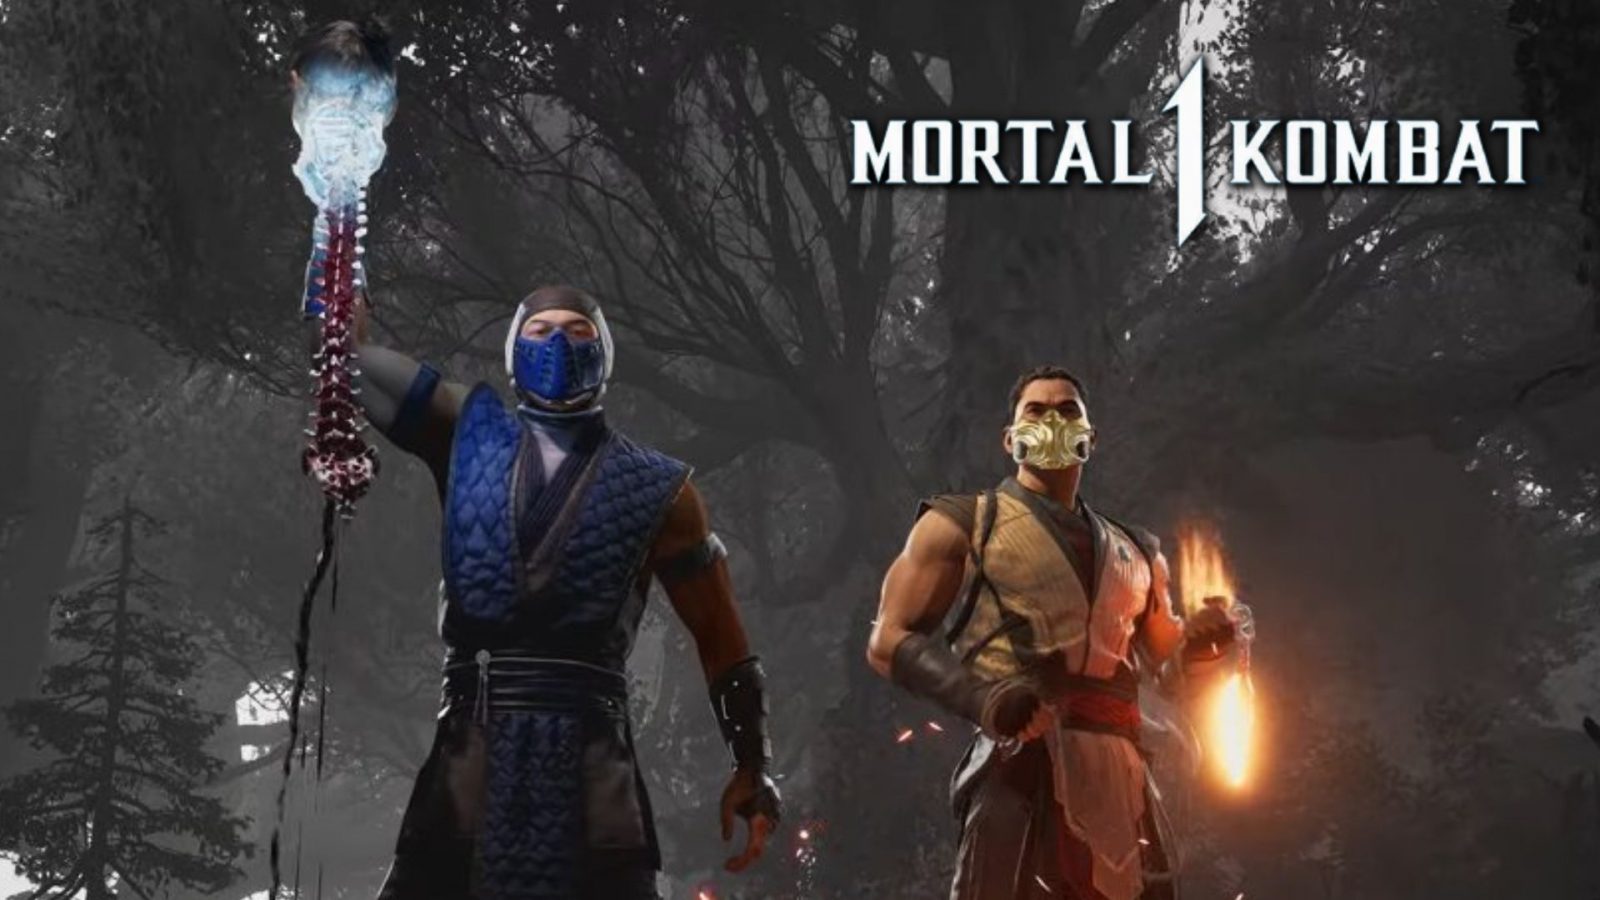 Mortal Kombat 1 Thanksgiving Fatality 